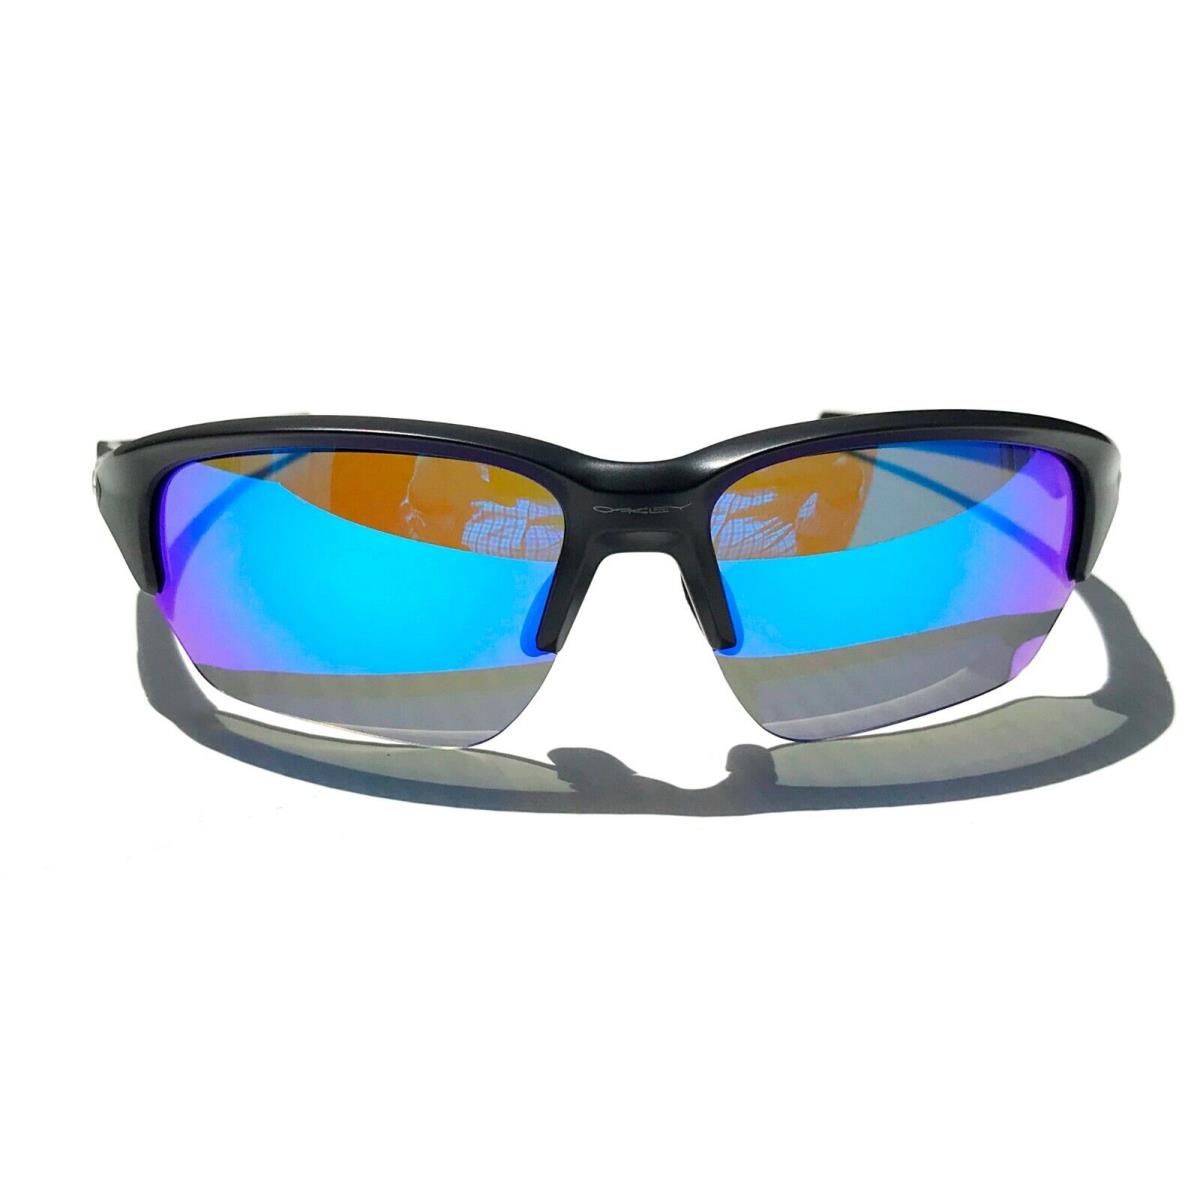 Oakley sunglasses Flak Beta - Black Satin Frame, Green Lens 0